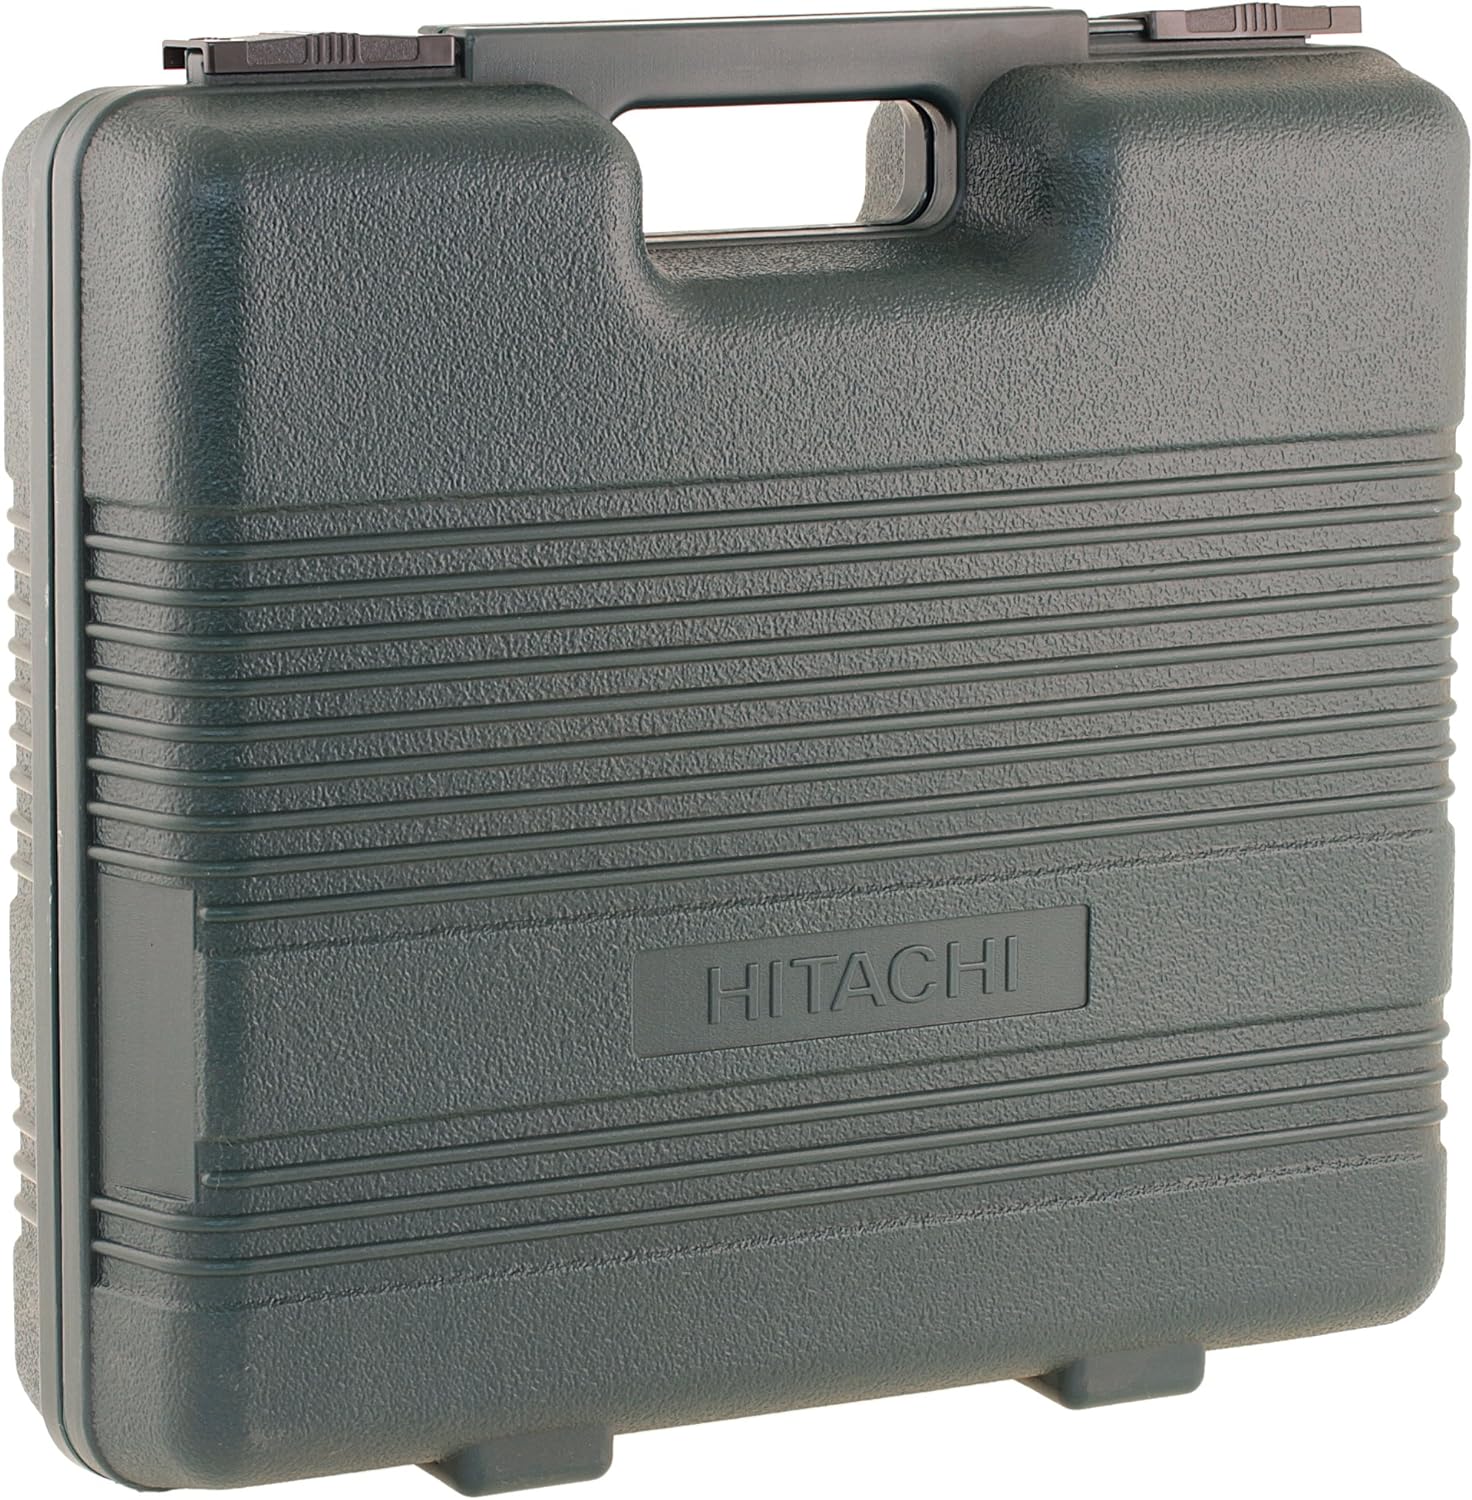 Hitachi 317262 Plastic Carrying Case for the  CJ120V Orbital Jig Saw